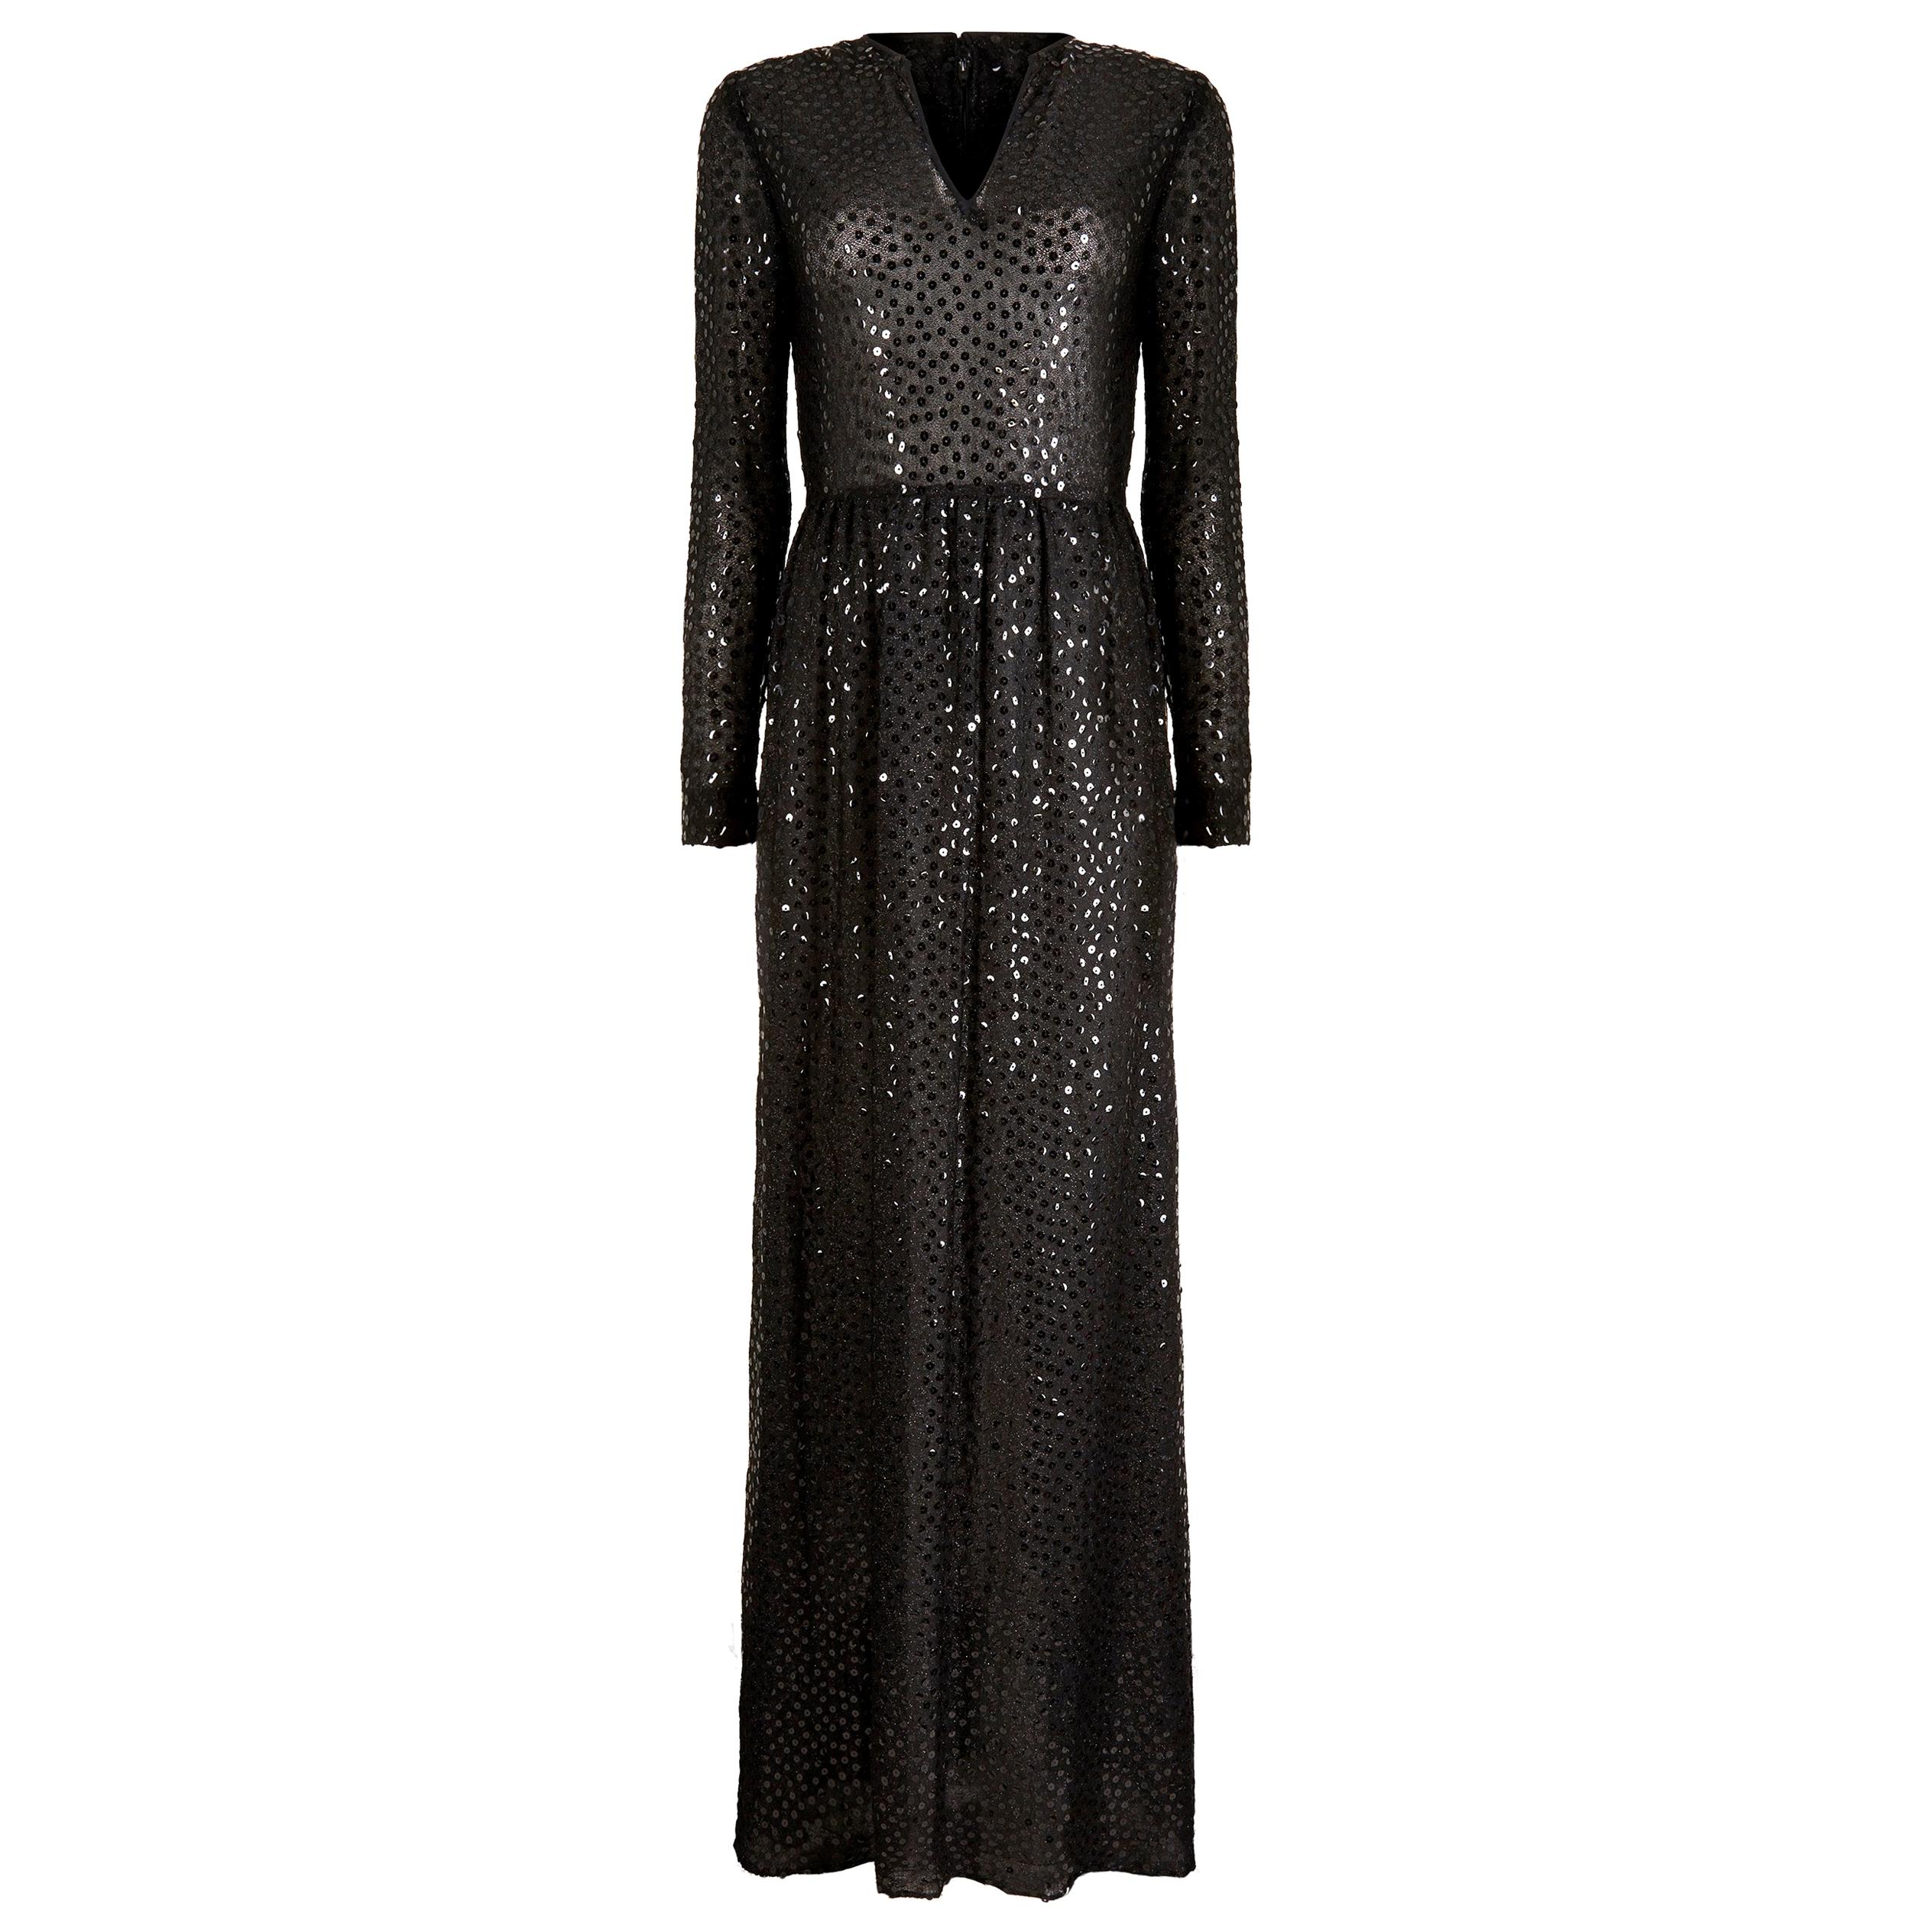 1970s Morty Sussman For Mollie Parnis Black Sequinned Dress For Sale